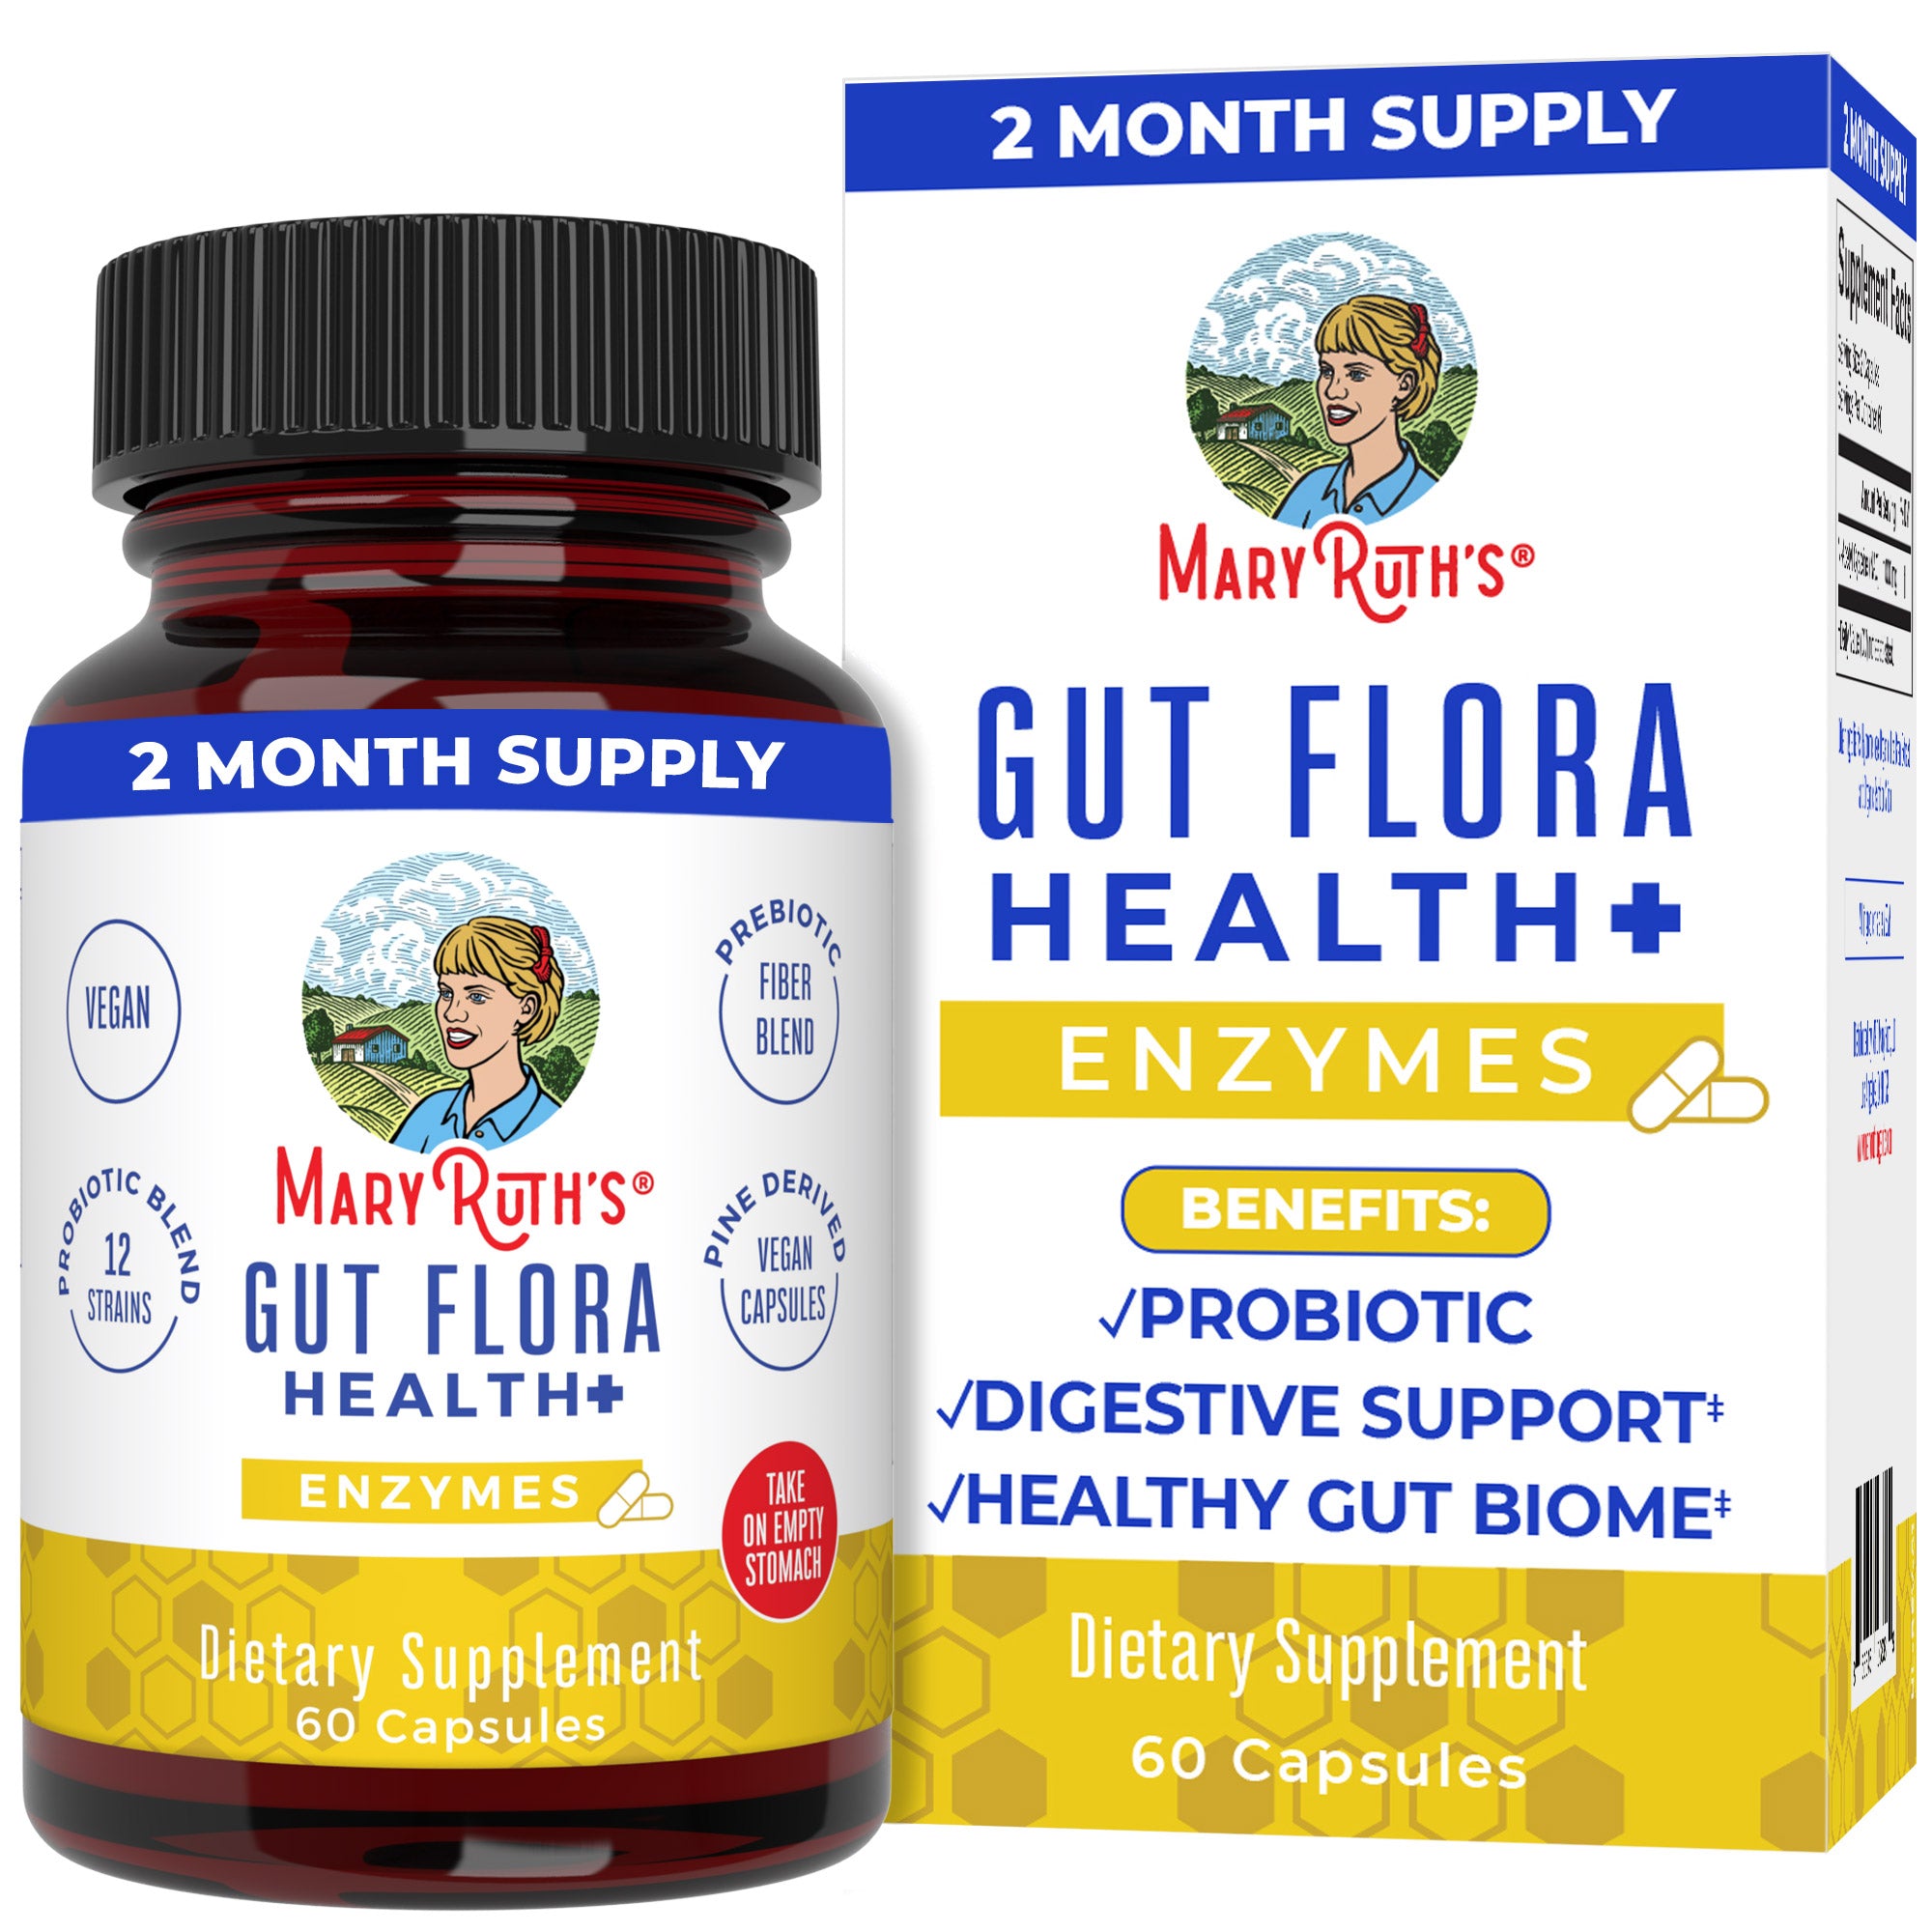 Gut Flora Health+ Enzymes